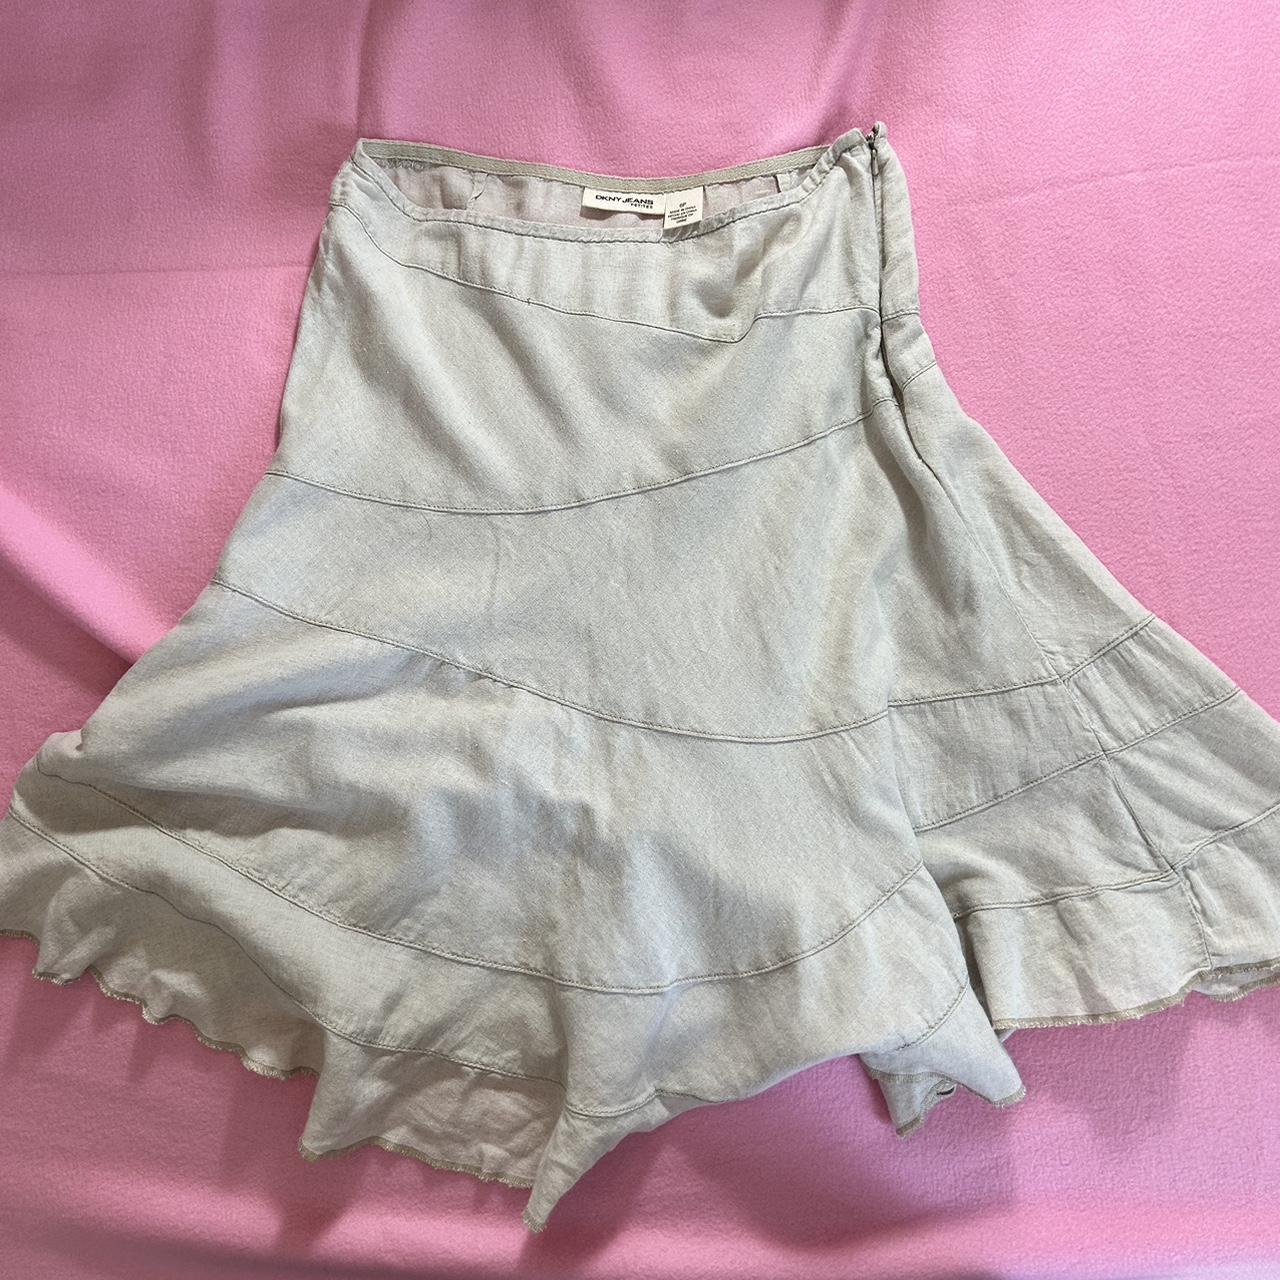 DKNY Women's Tan Skirt